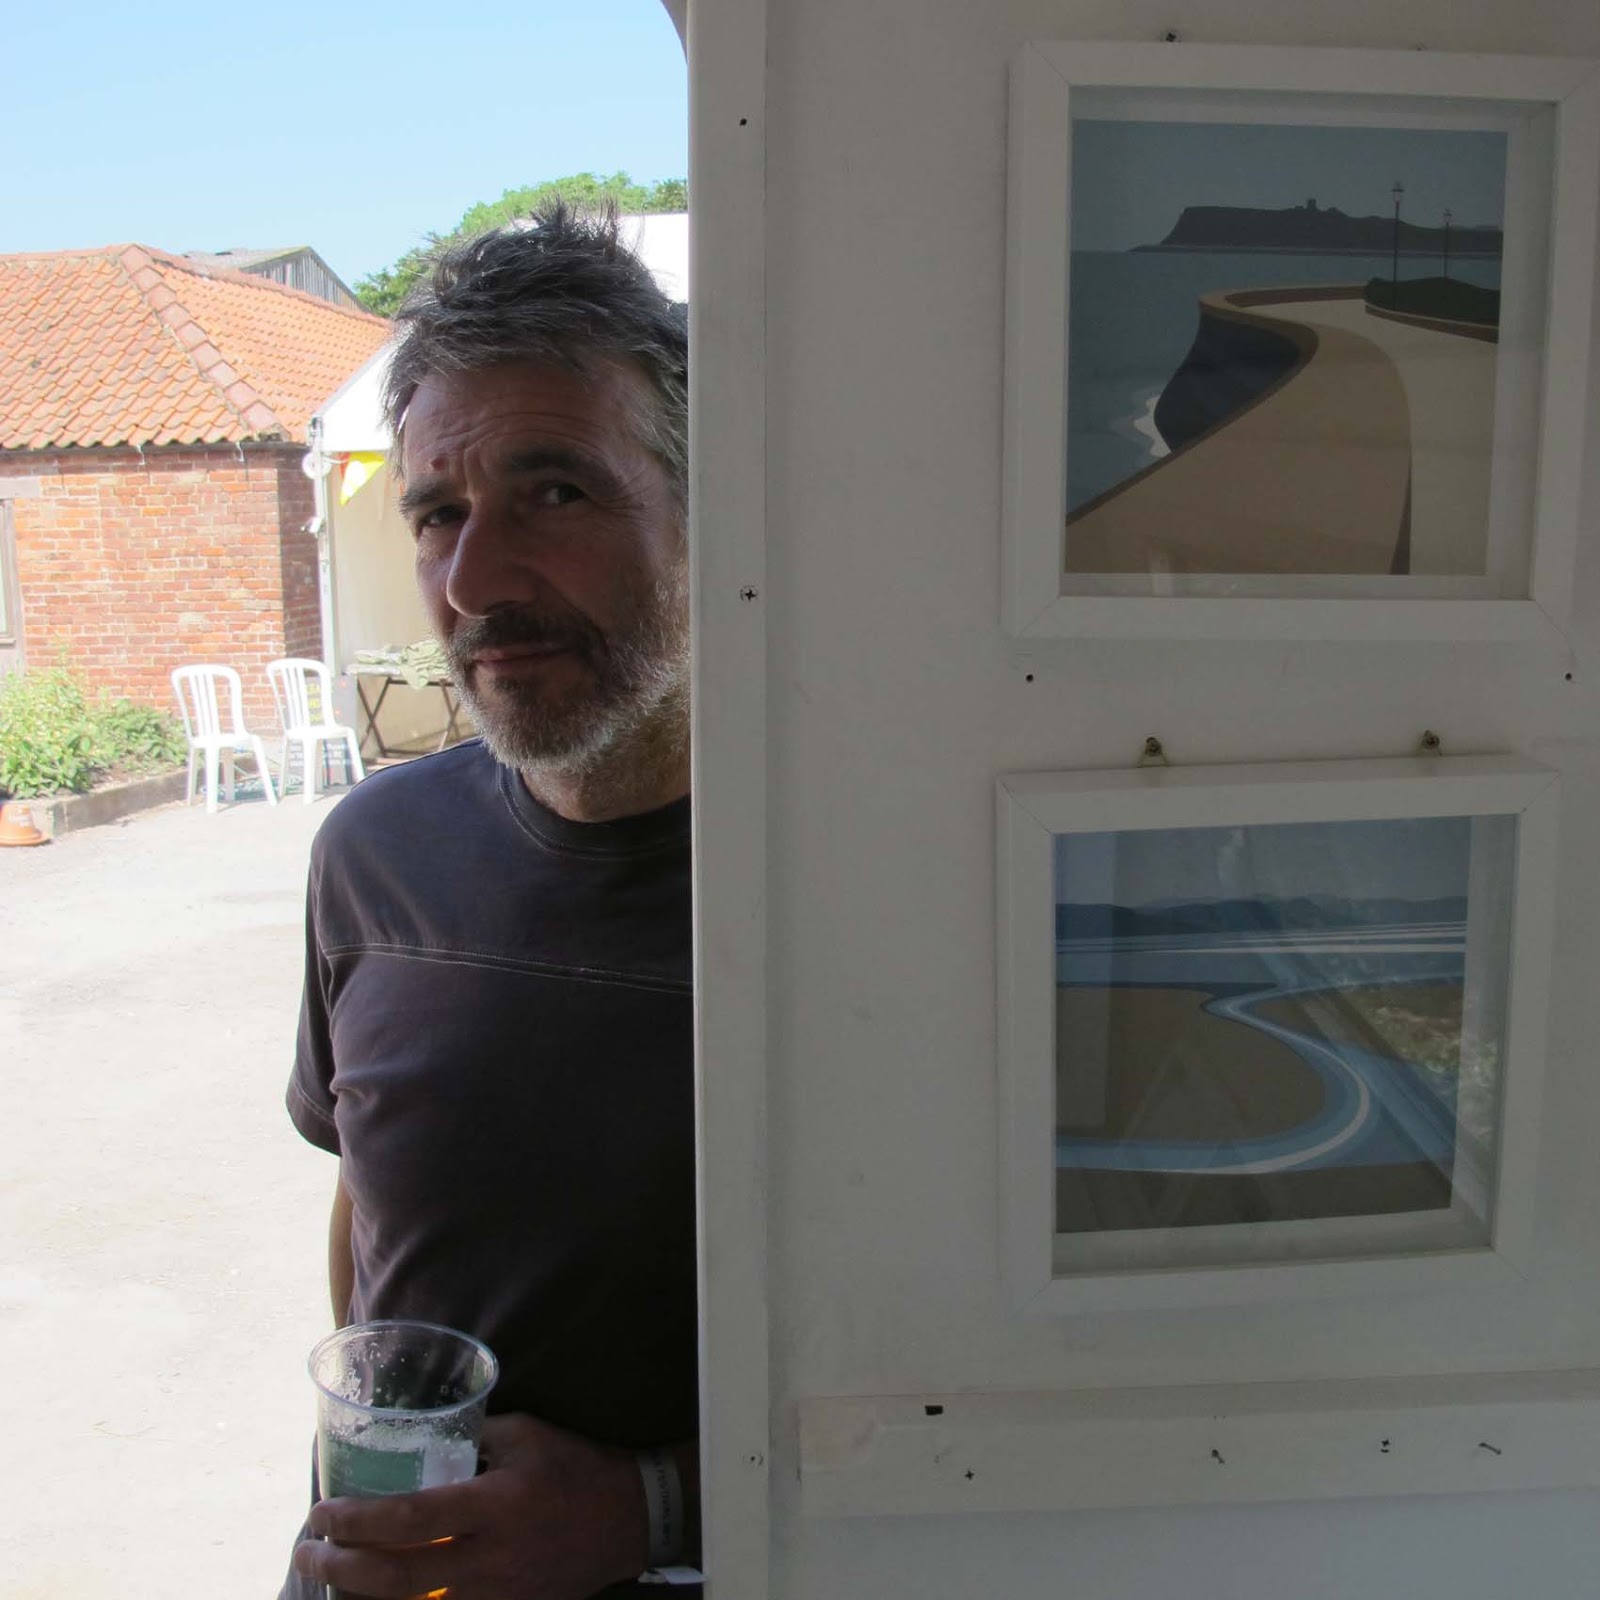 duckettandjeffreys: Duckett and Jeffreys at Moonbeams with the Touring Caravan Gallery